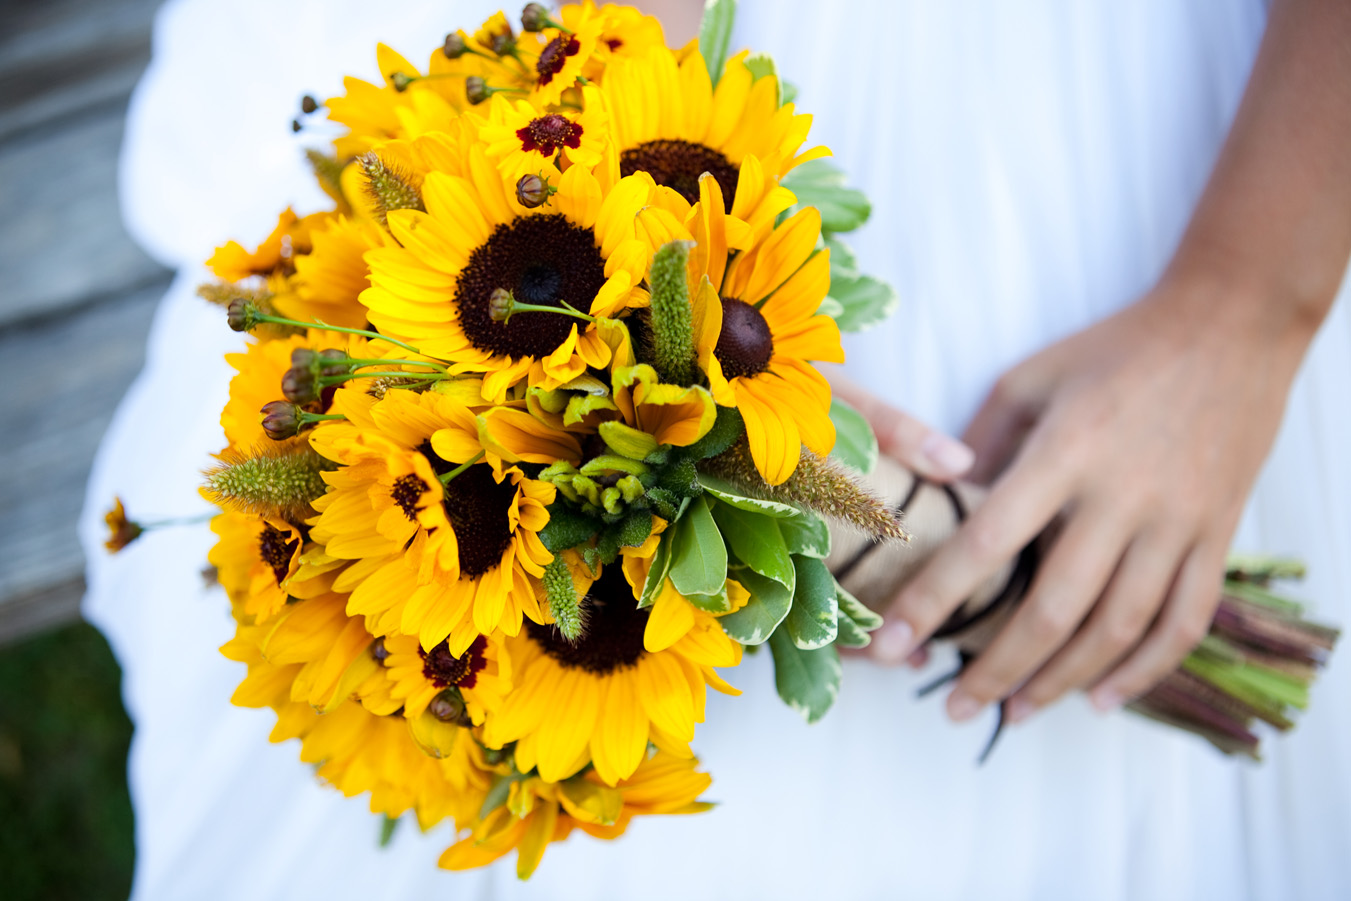 wedding-bouquet-inspiration